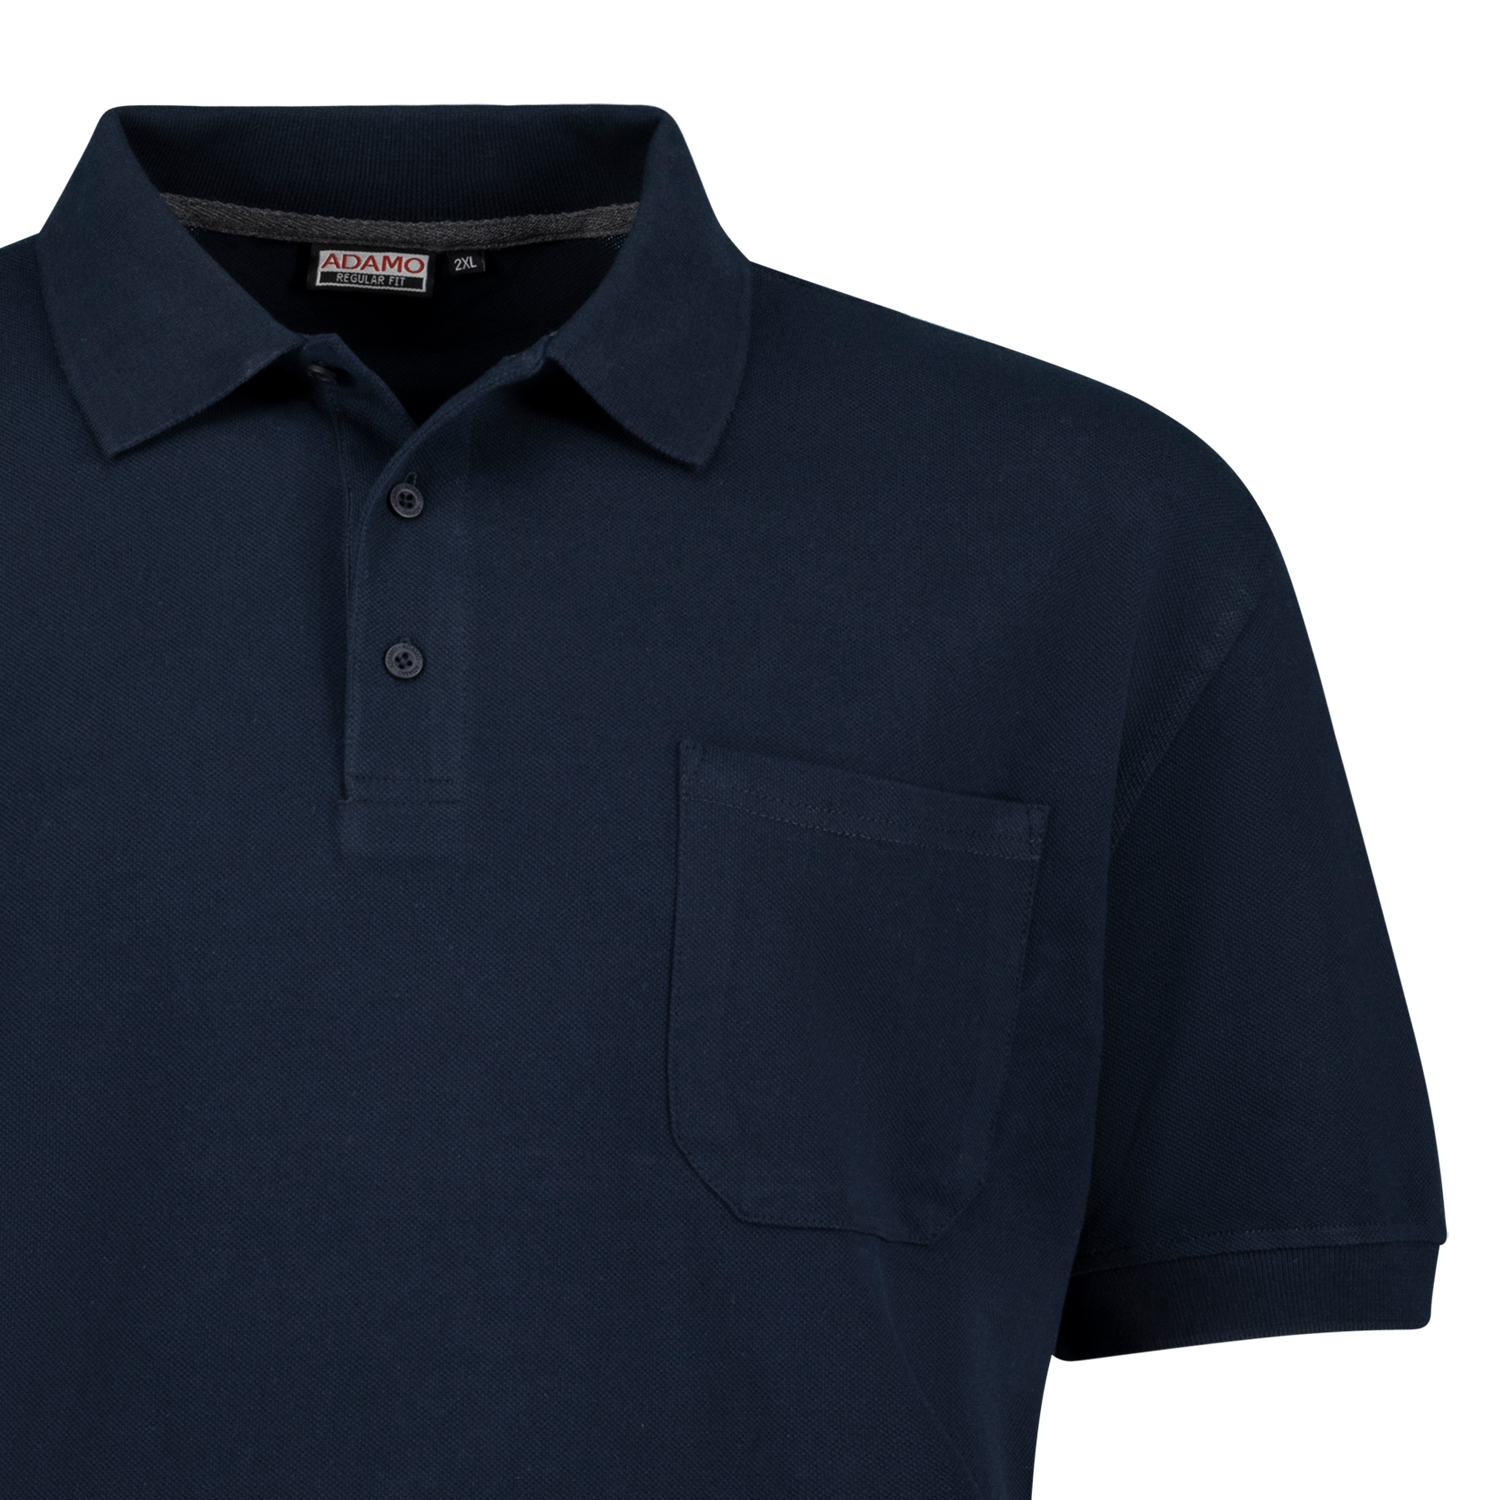 ADAMO Herren Pique Polohemd kurzärmlig Modell KENO in dunkelblau bis Übergröße 10XL Regular Fit